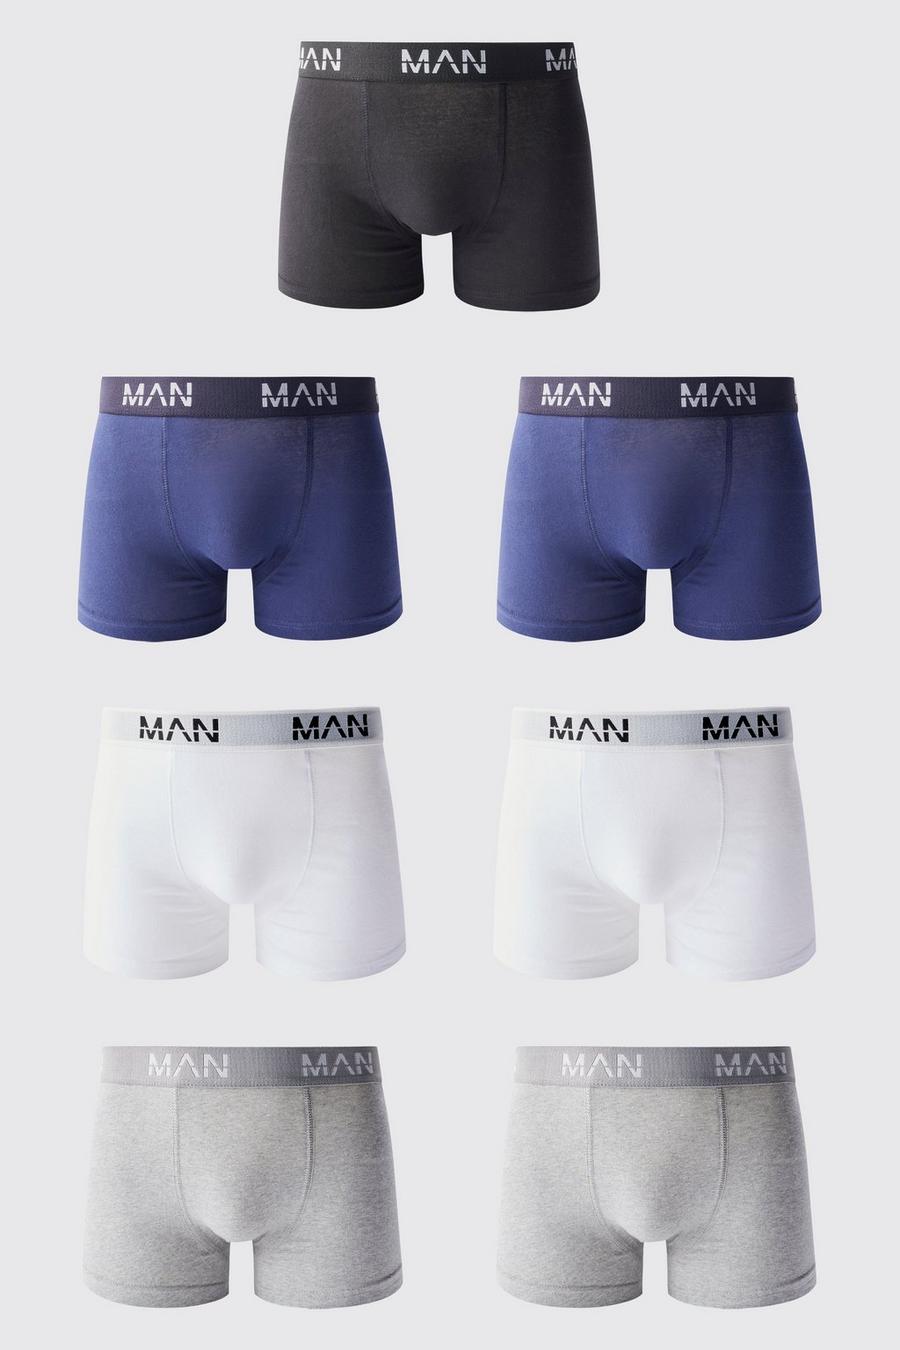 Boxer Man in colori misti - set di 7 paia, Multi image number 1